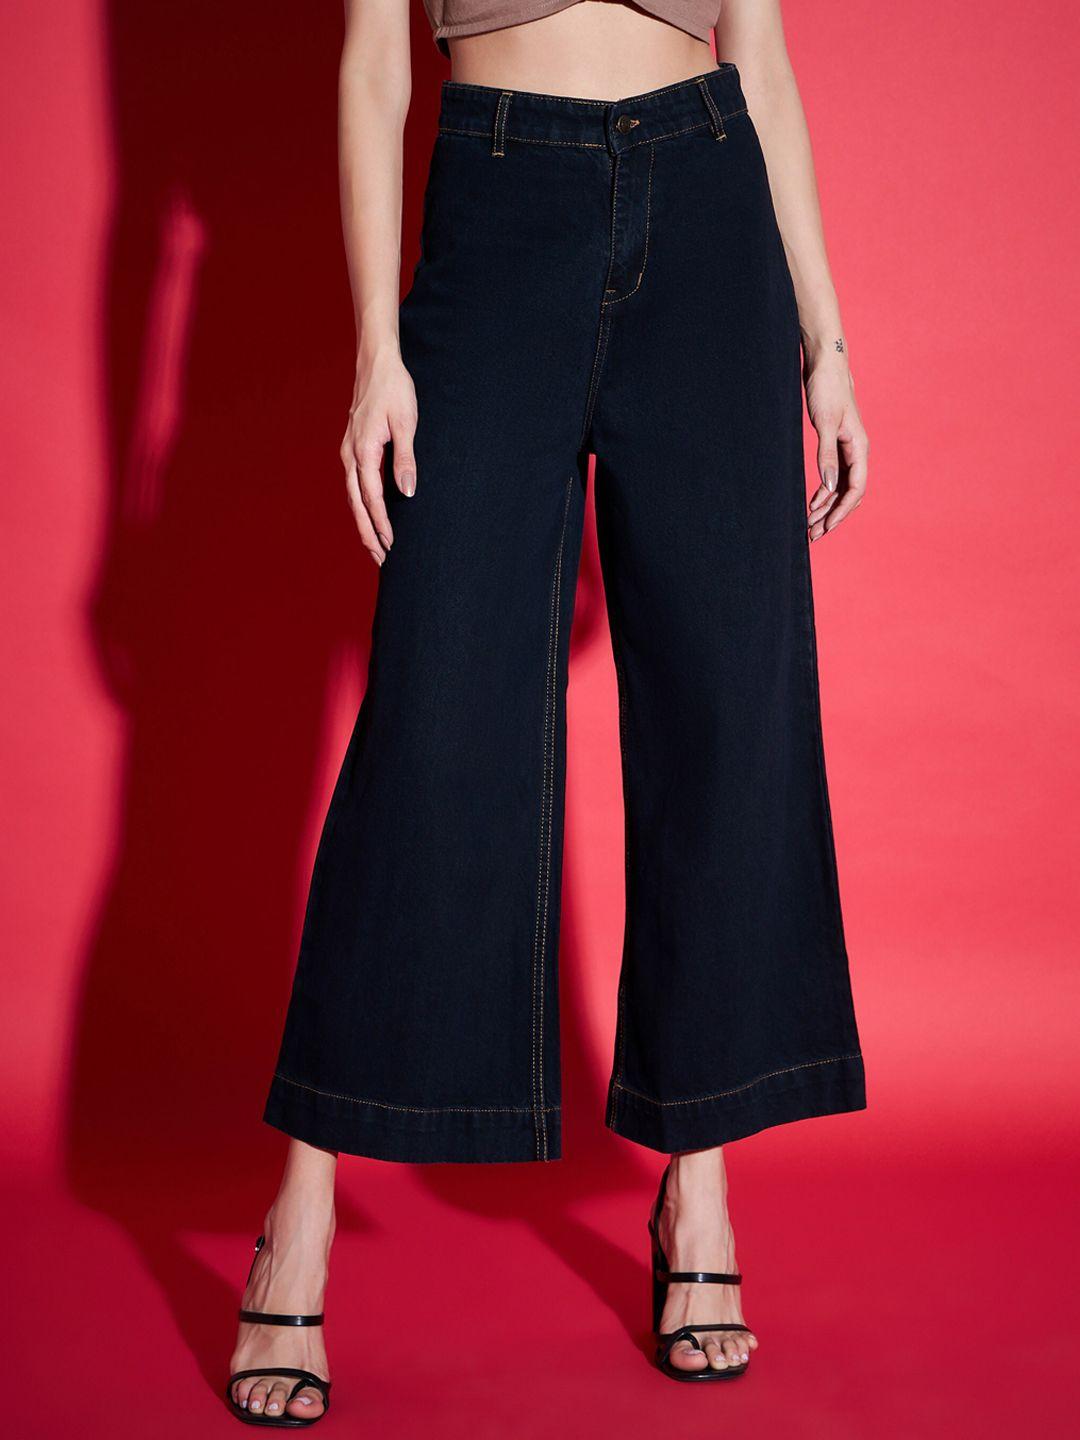 sassafras women black comfort high-rise pure cotton wide leg jeans